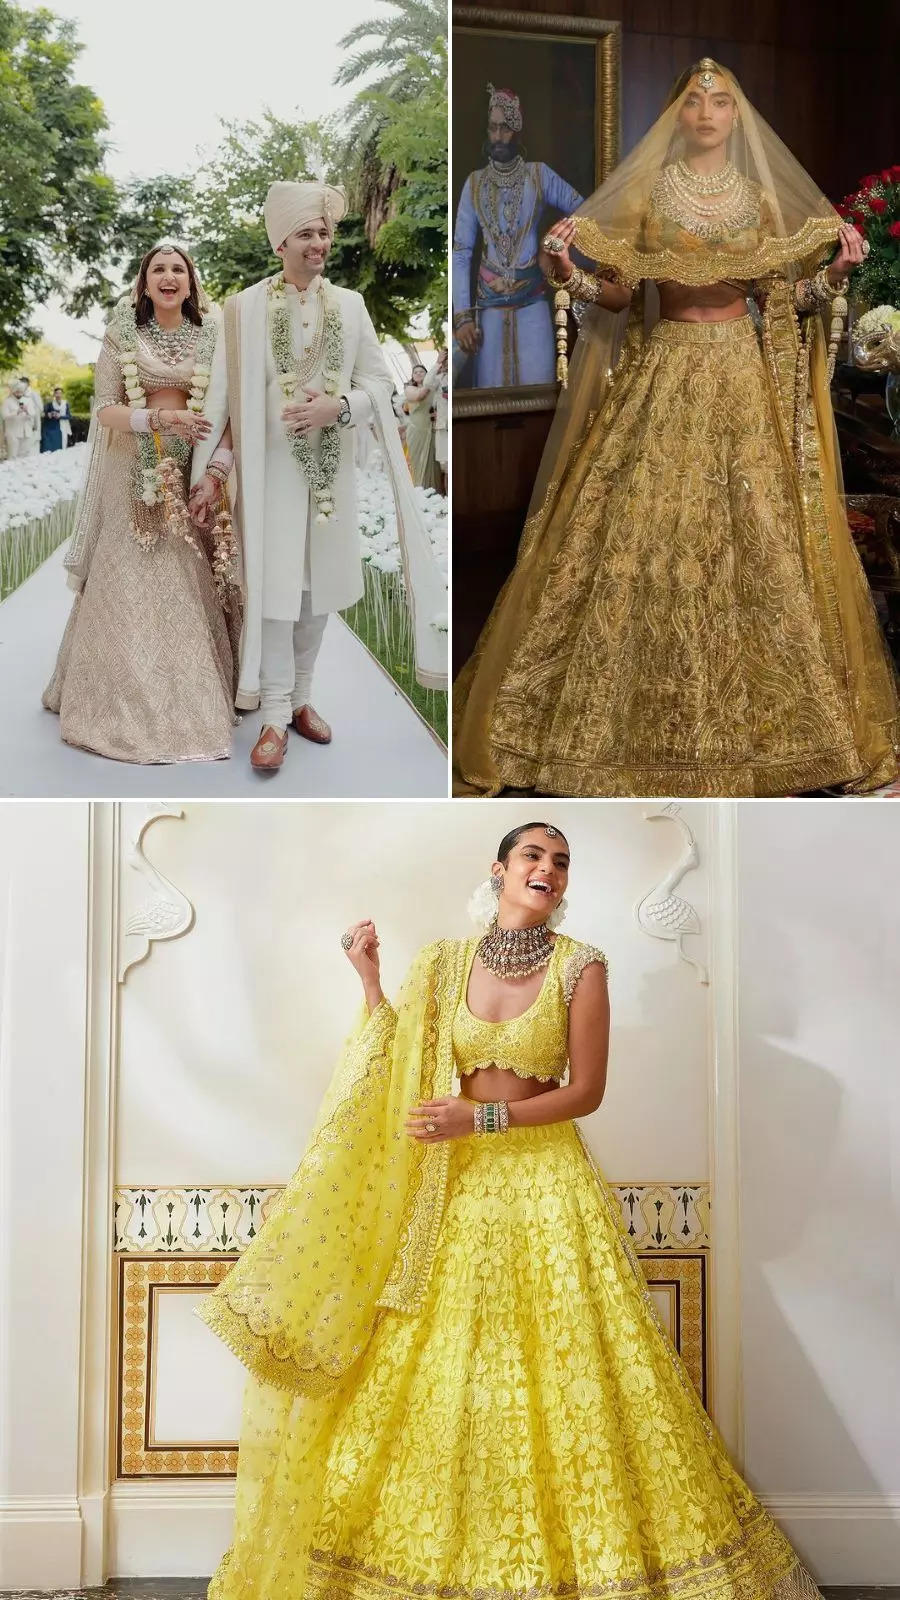 Beautiful yellow red lehanga !! Royal ! Indian wedding | Indian bride  dresses, Indian bridal, Indian bride